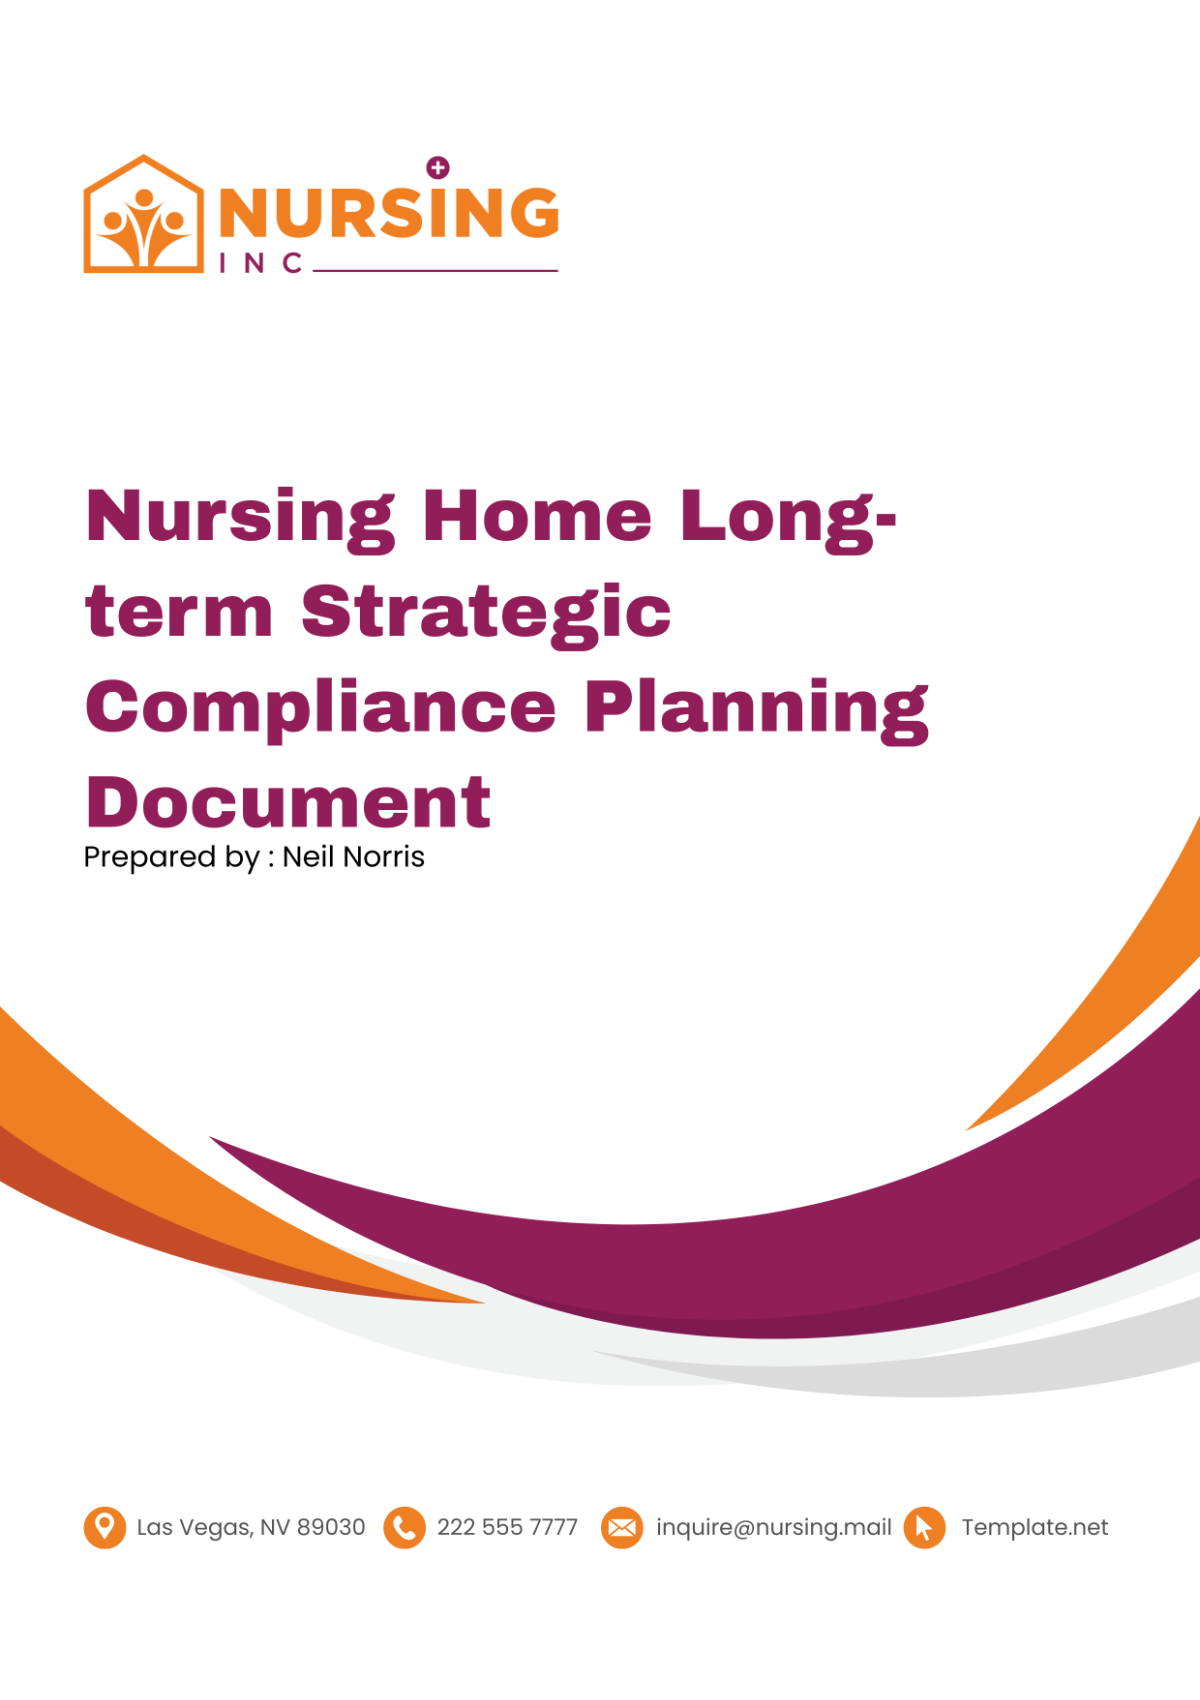 Nursing Home Long-term Strategic Compliance Planning Document Template